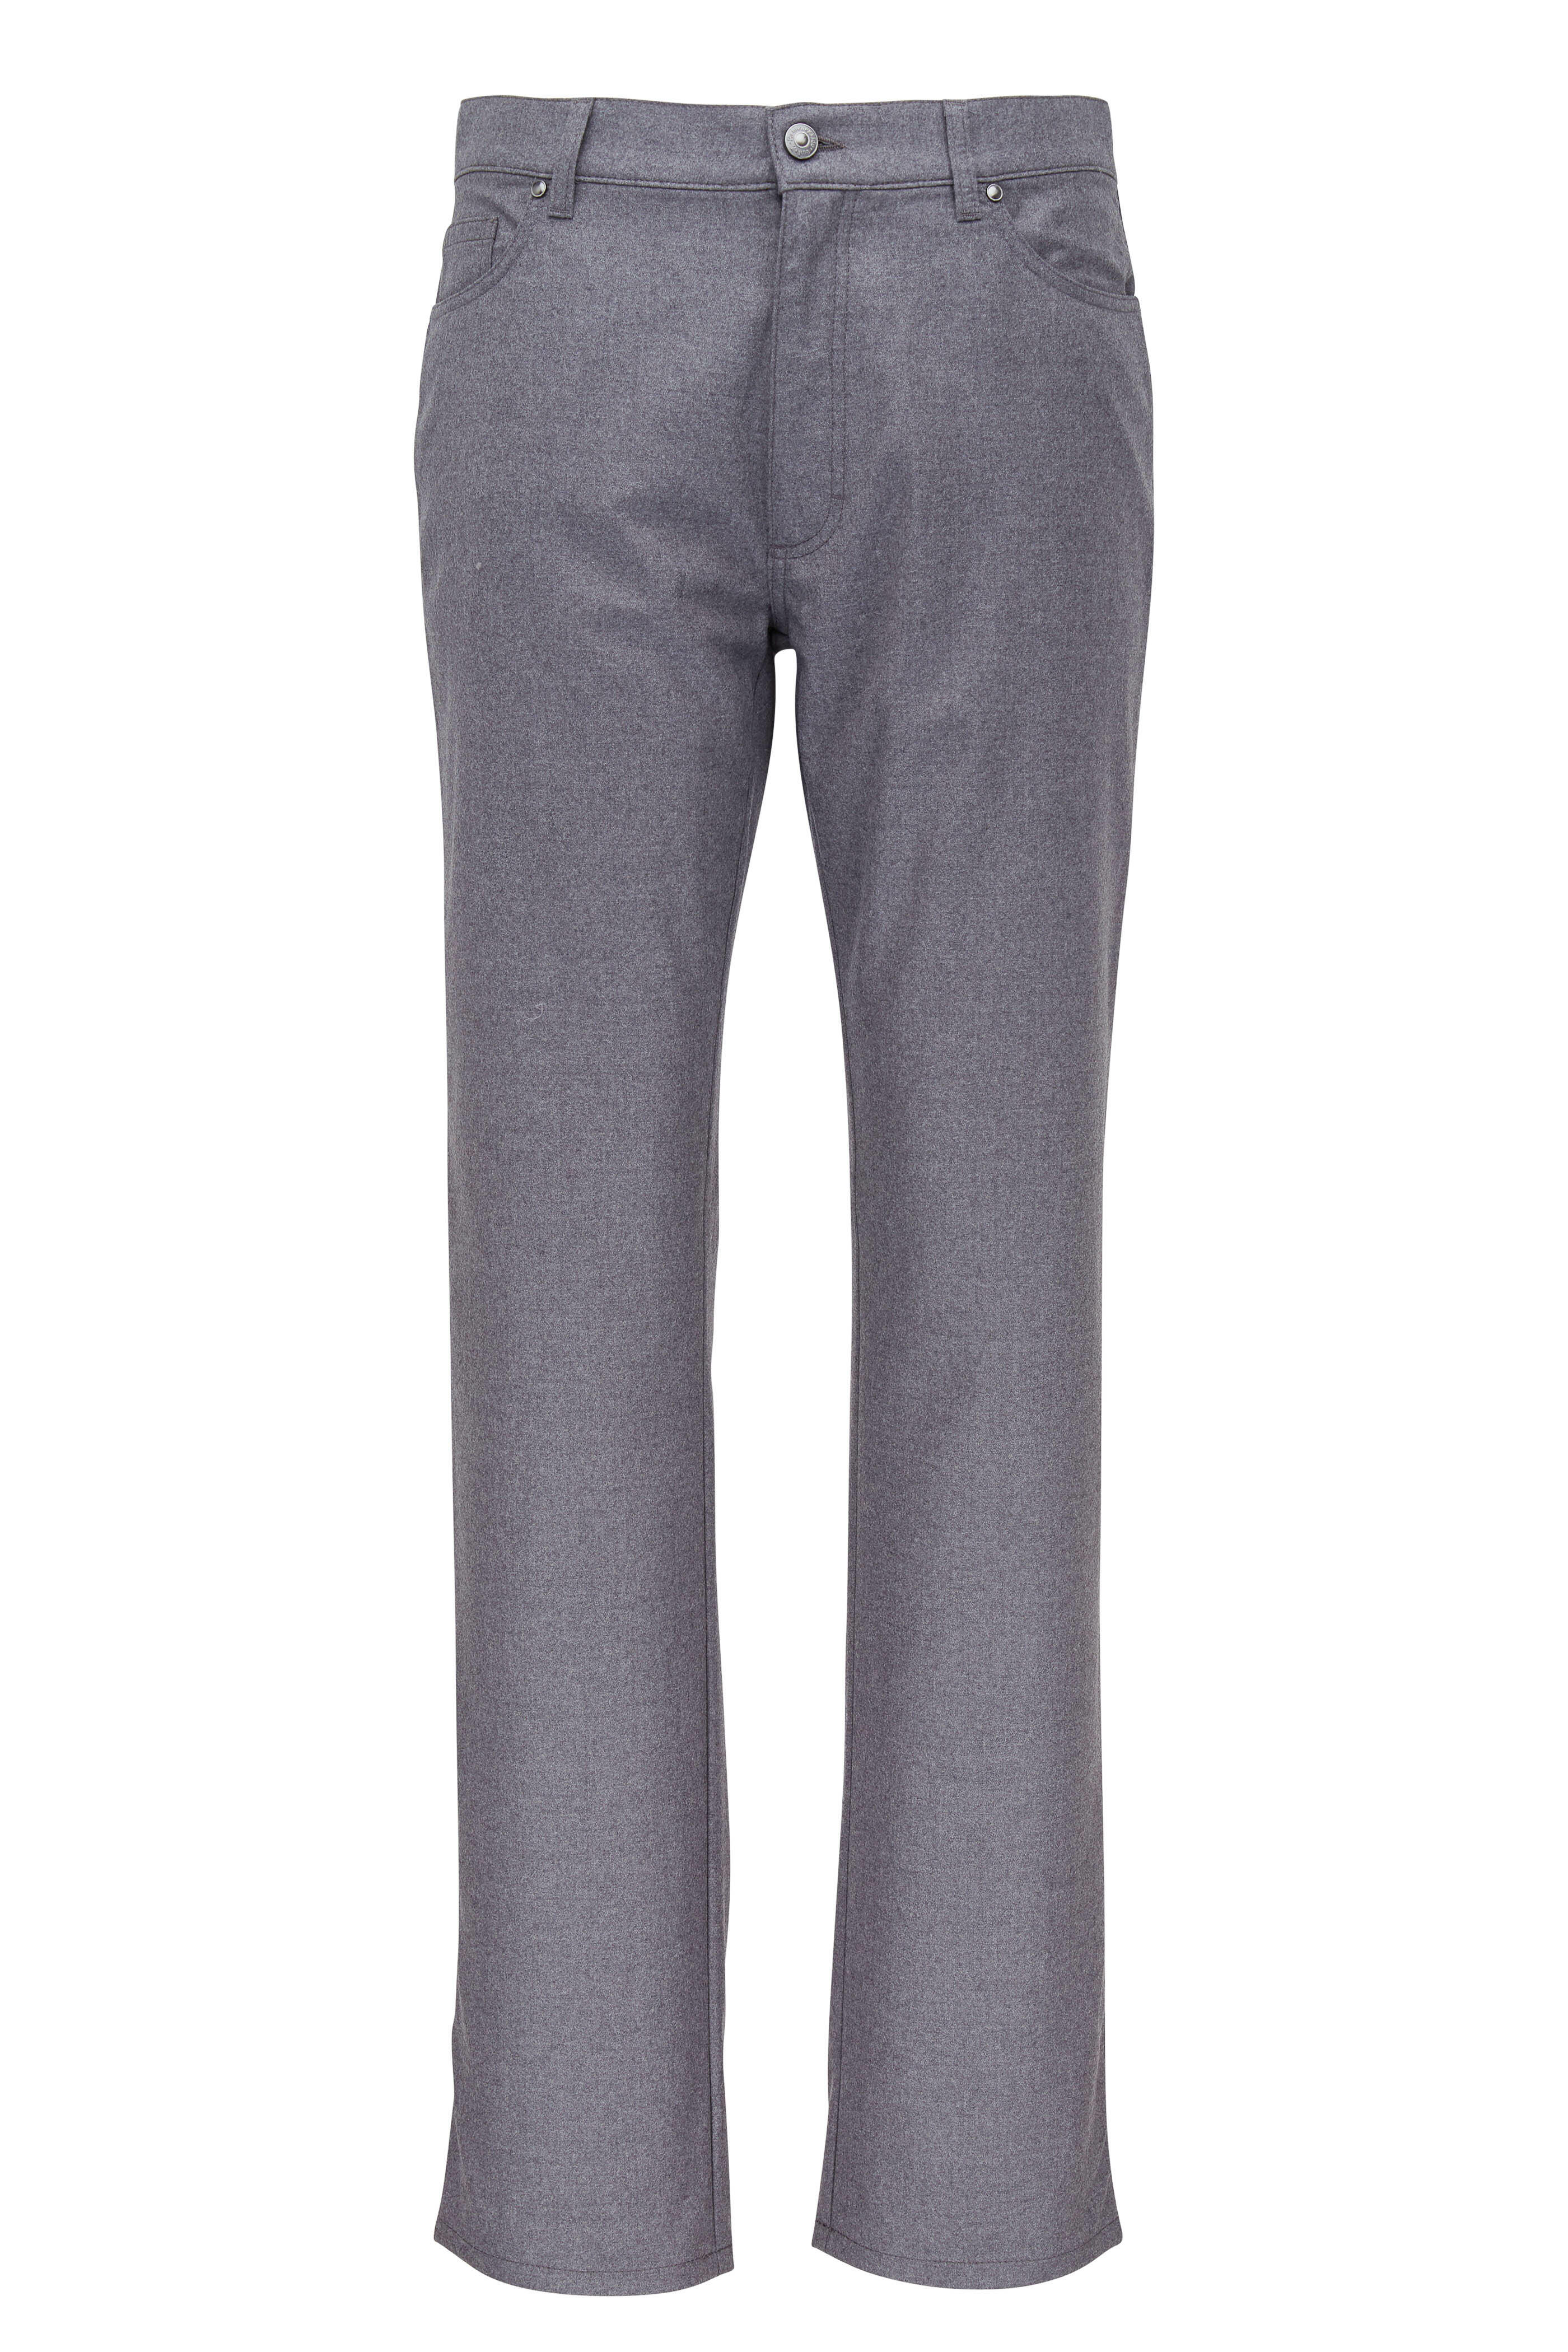 Zegna - Light Gray Wool Flannel Five Pocket Pant